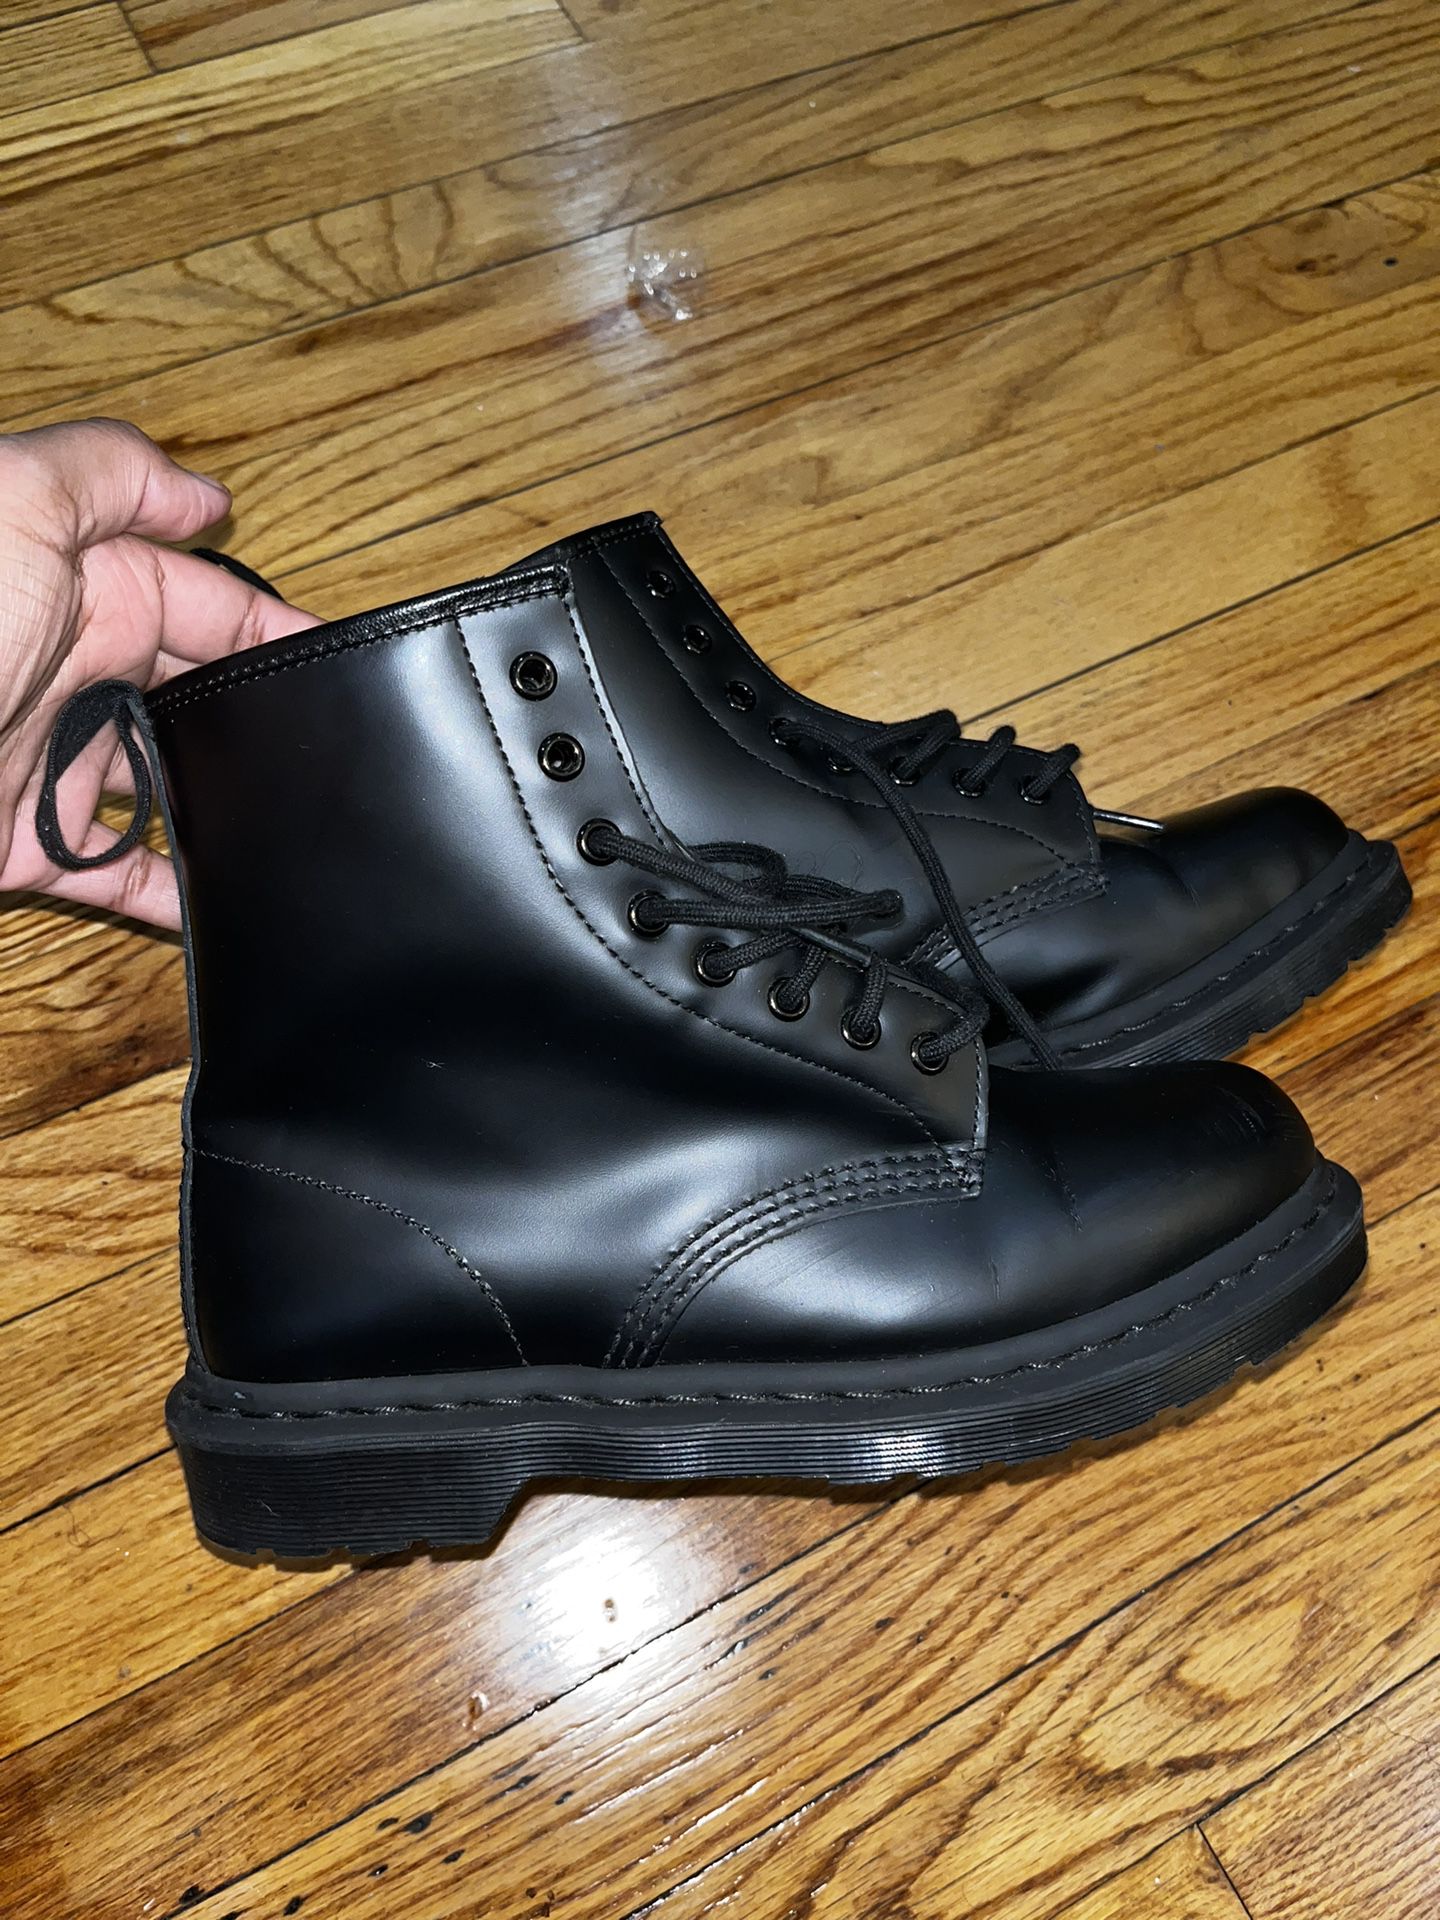 Dr Martens 1460 boots for in Kearny, NJ - OfferUp